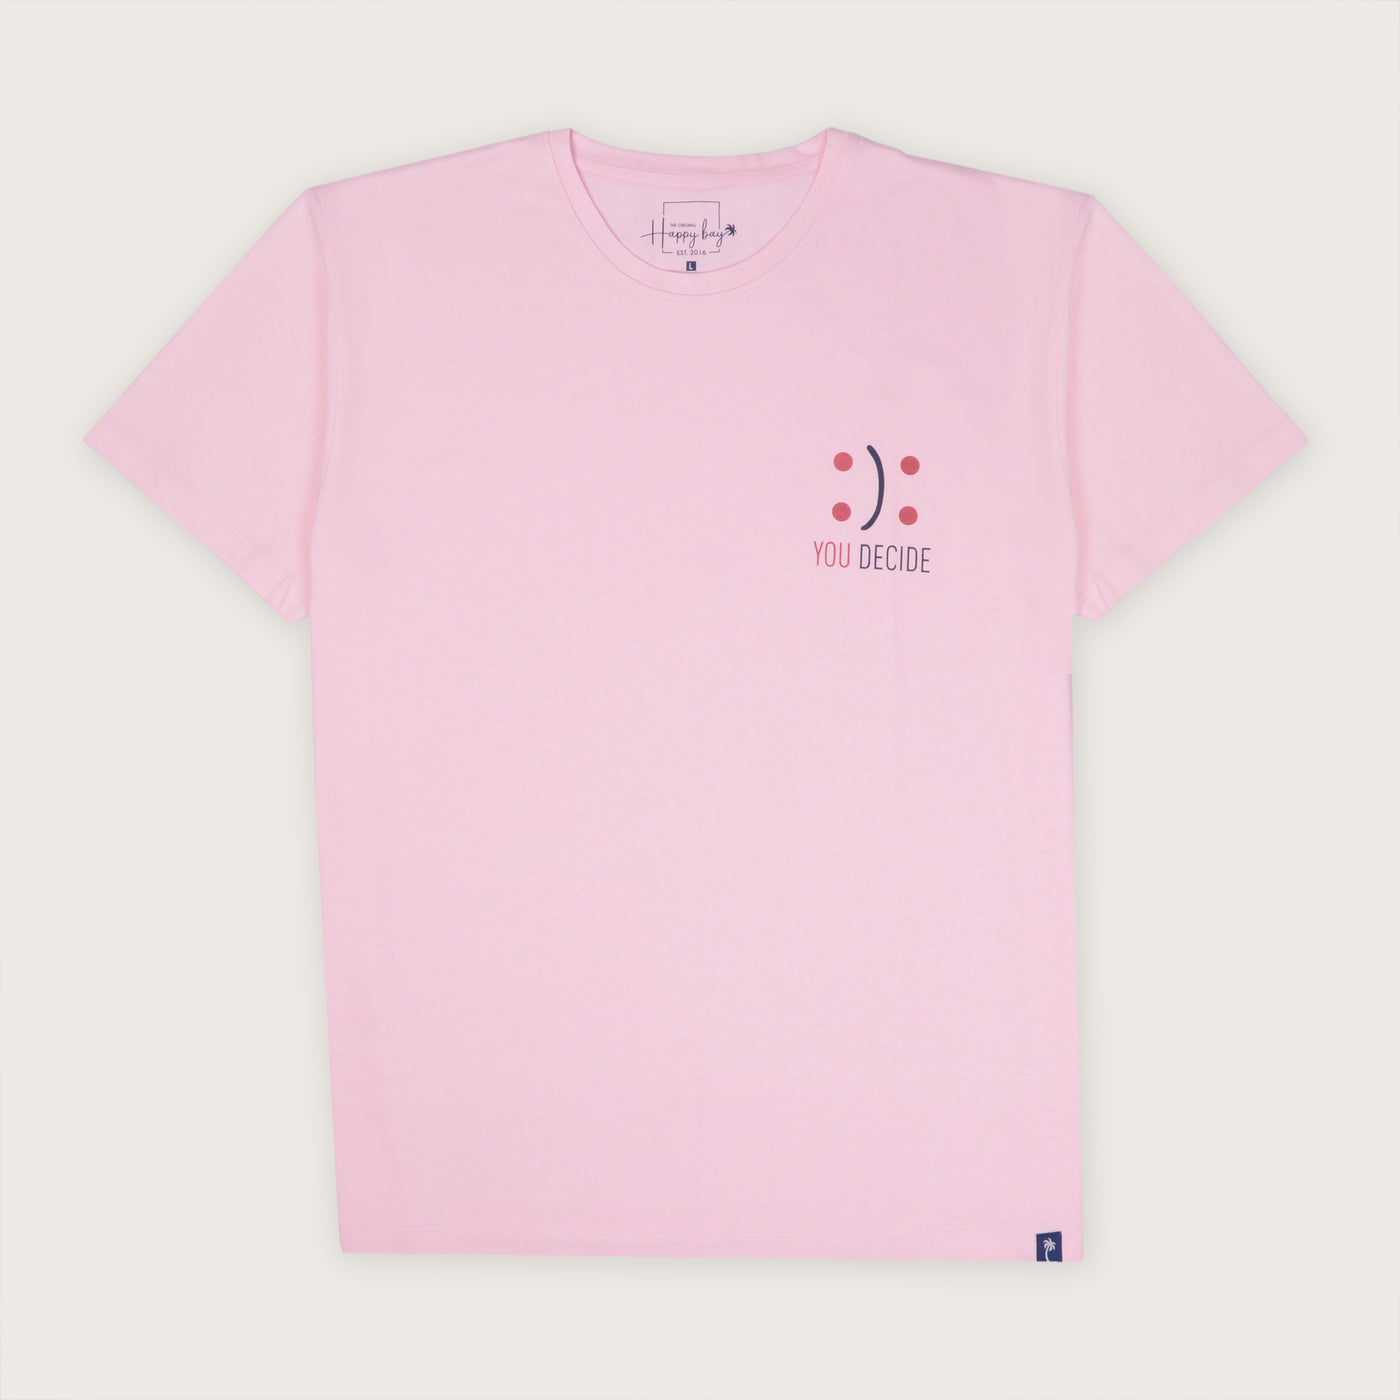 Walking on pink clouds T-Shirt